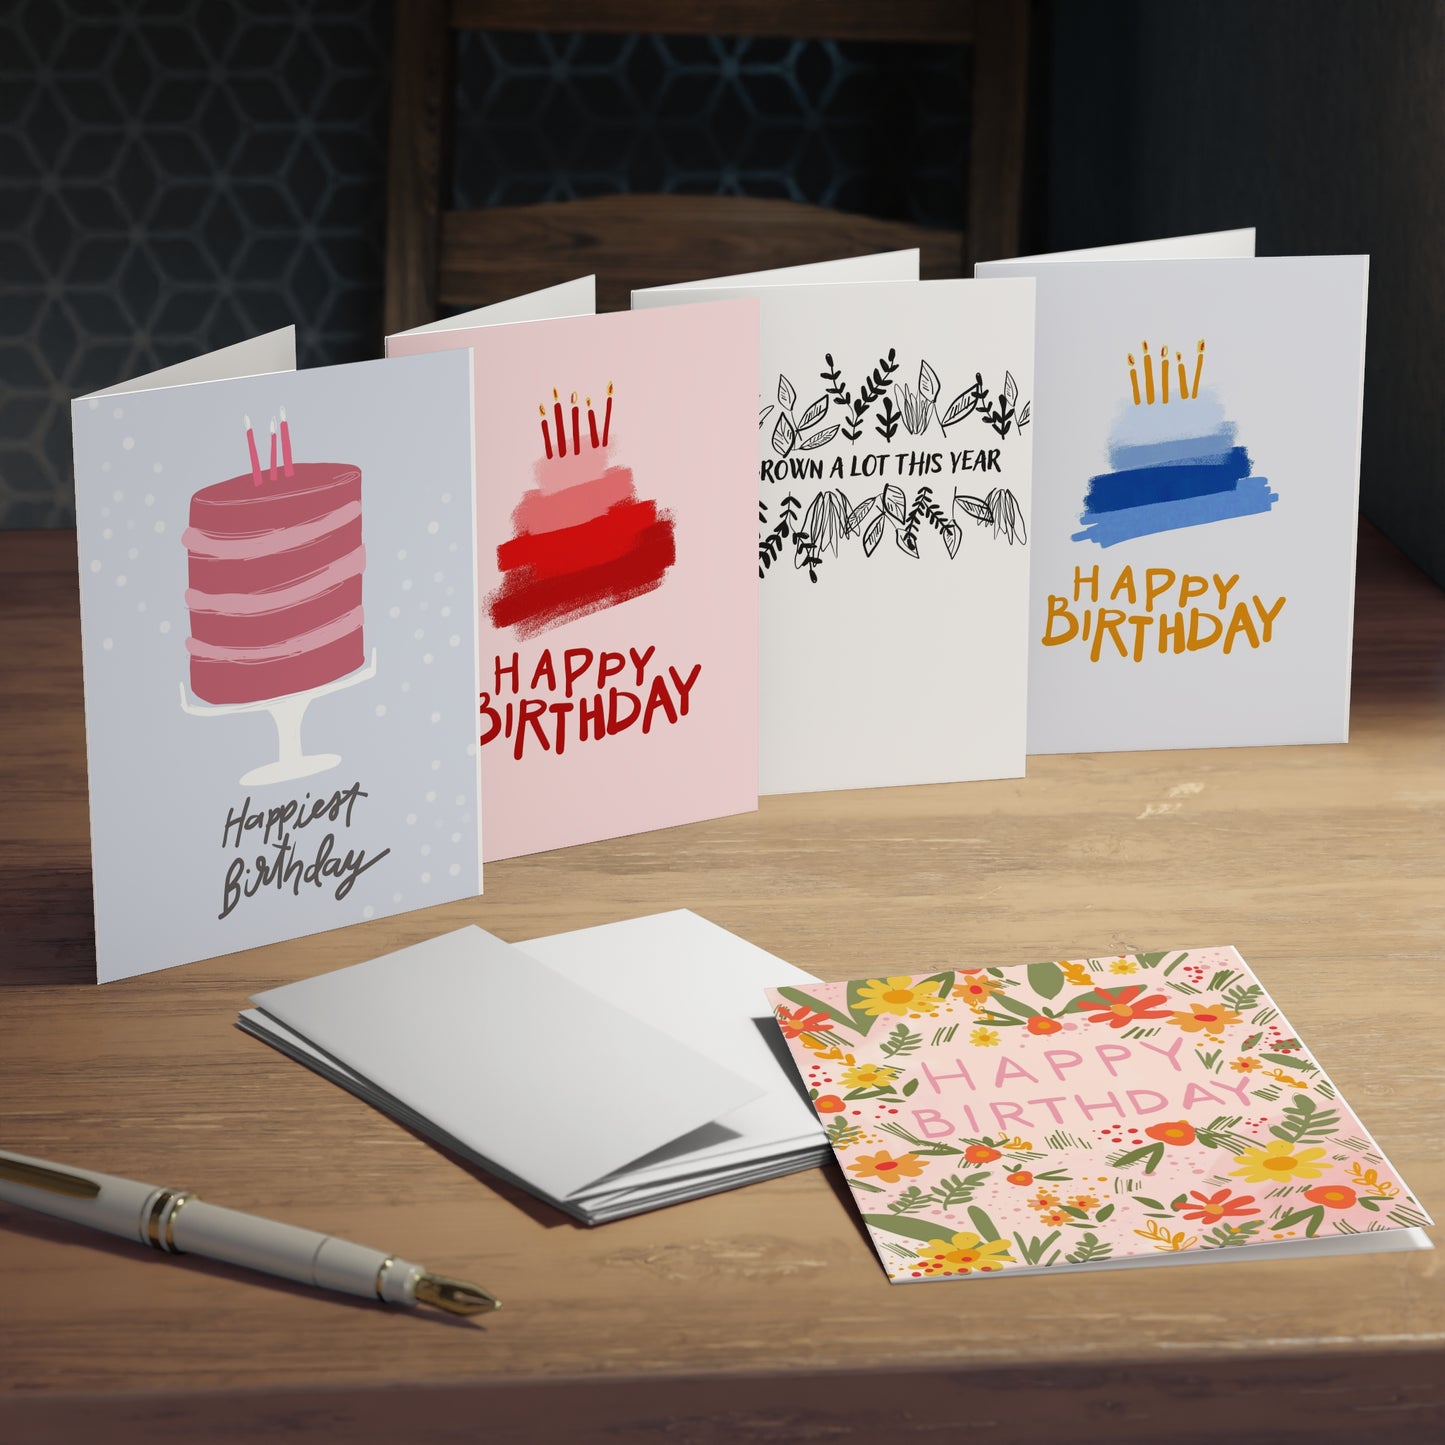 Happy Birthday bundle. Multi-Design Greeting Cards (5-Pack)